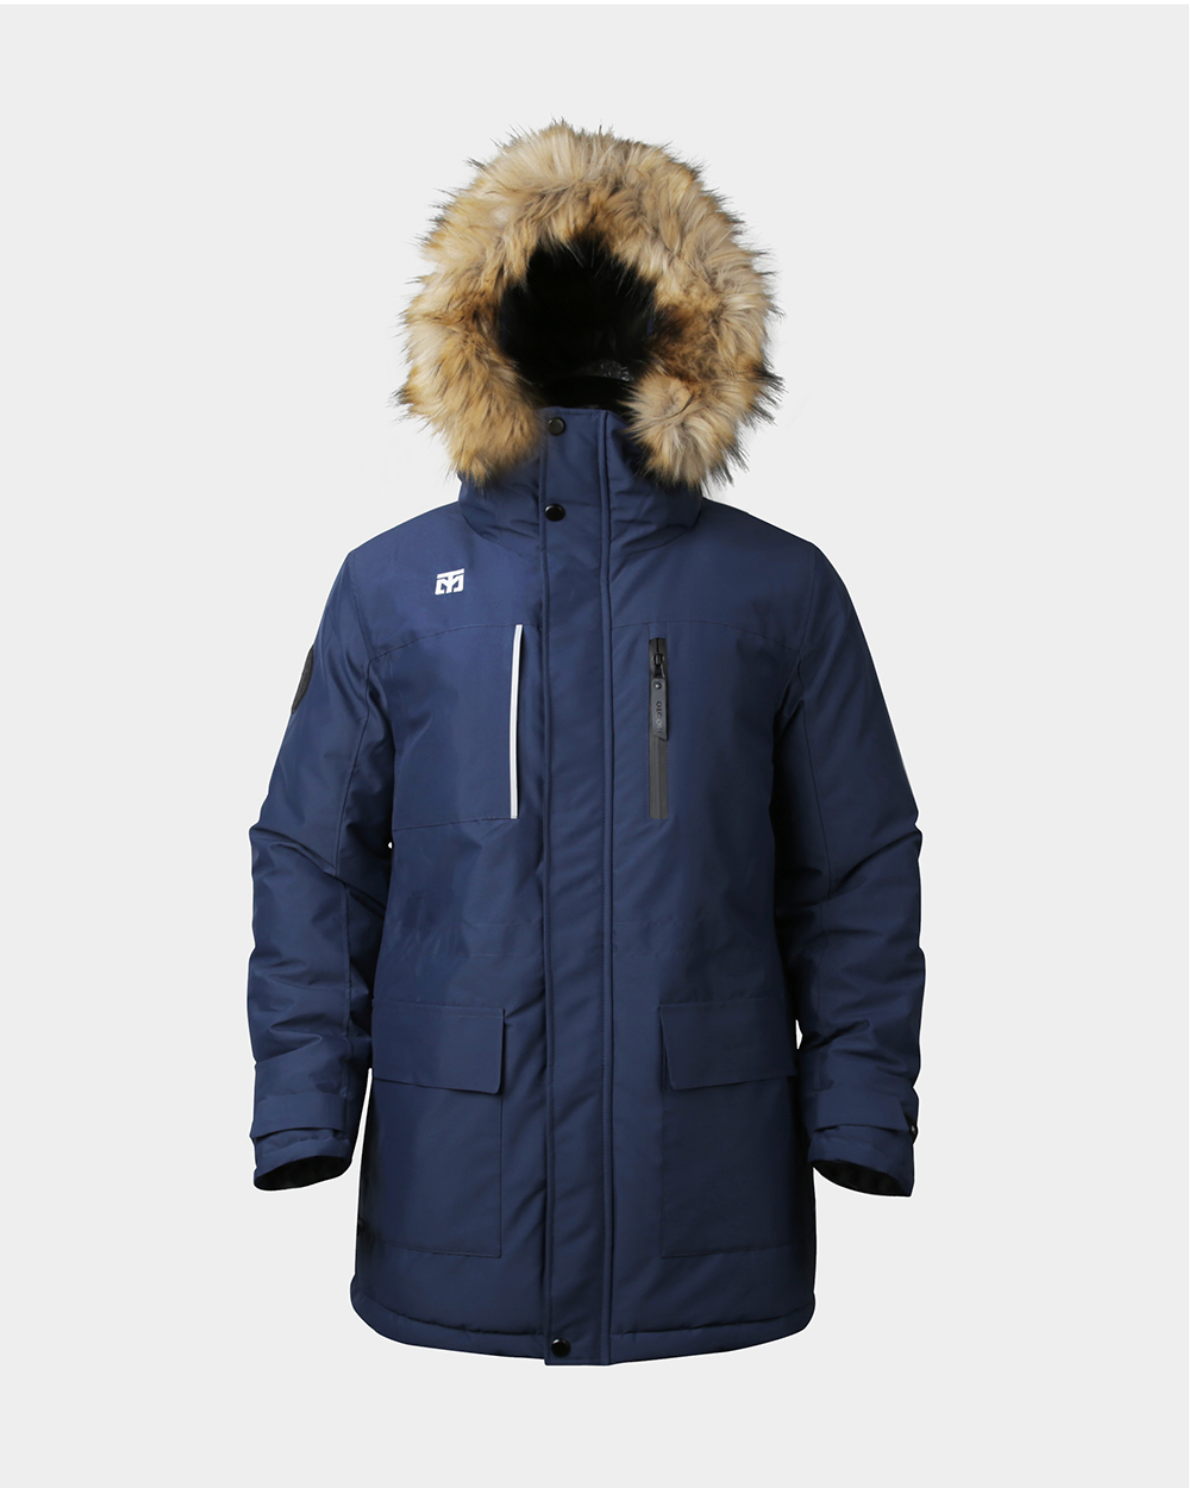 EUROPA Winter Jacket (Navy)